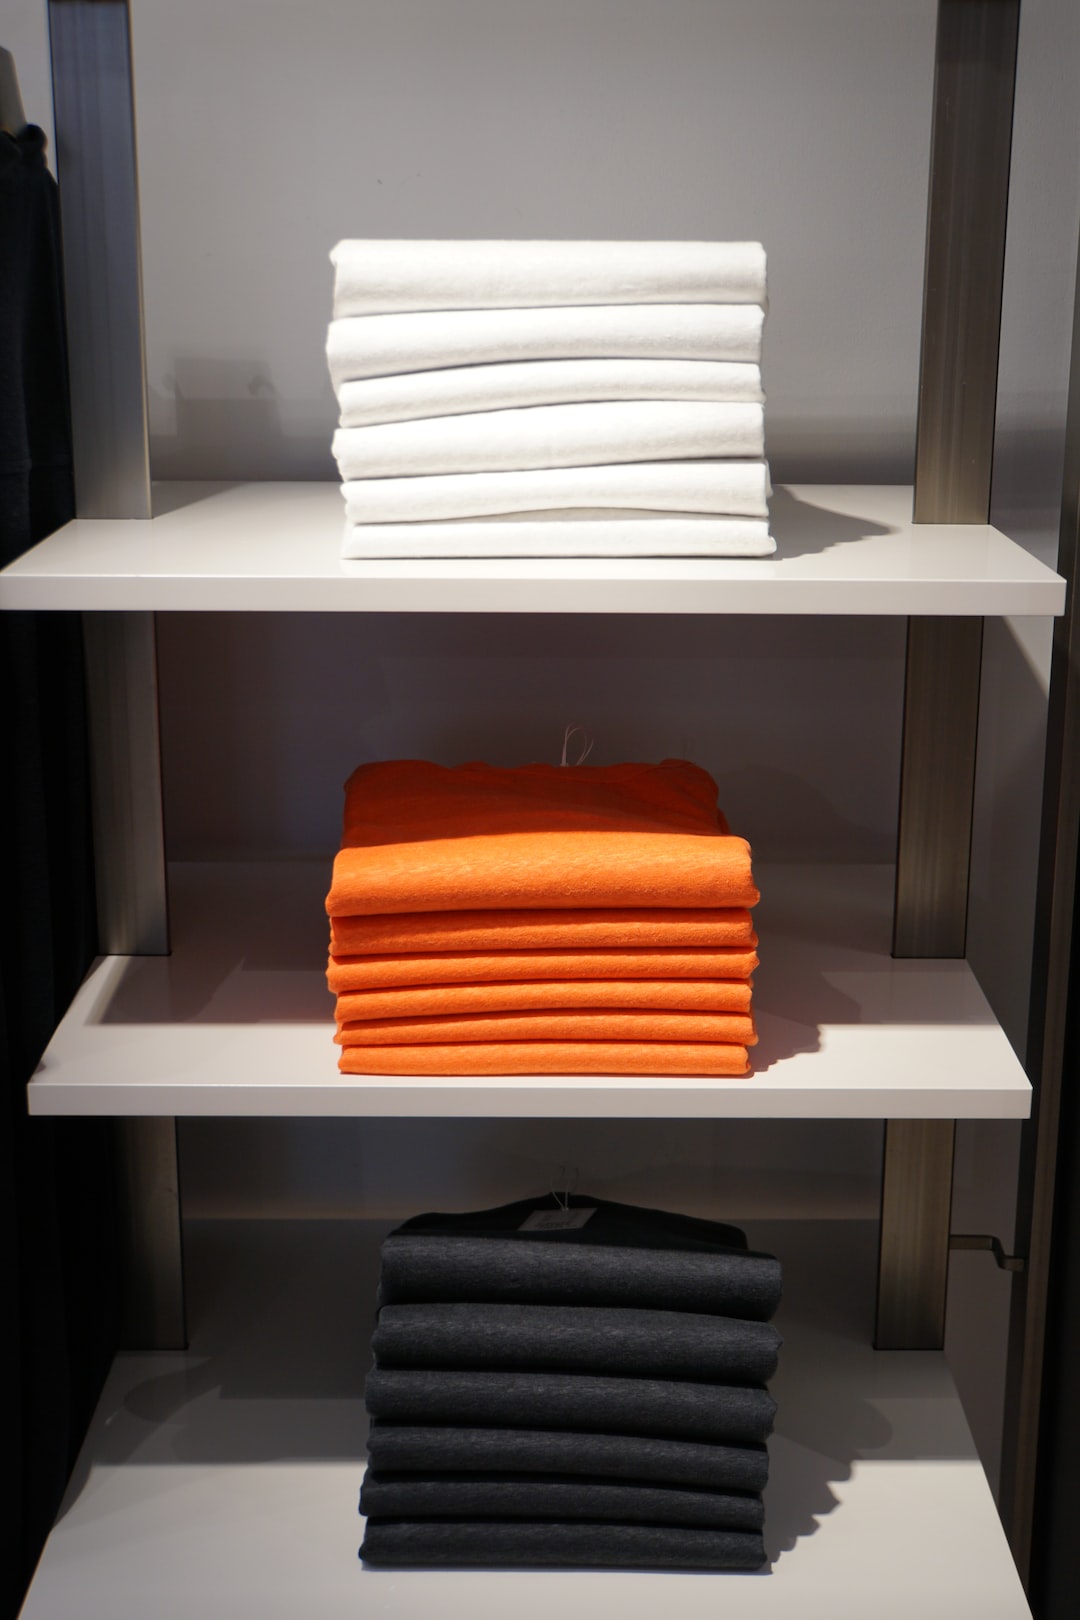 white and orange towels on white wooden shelf